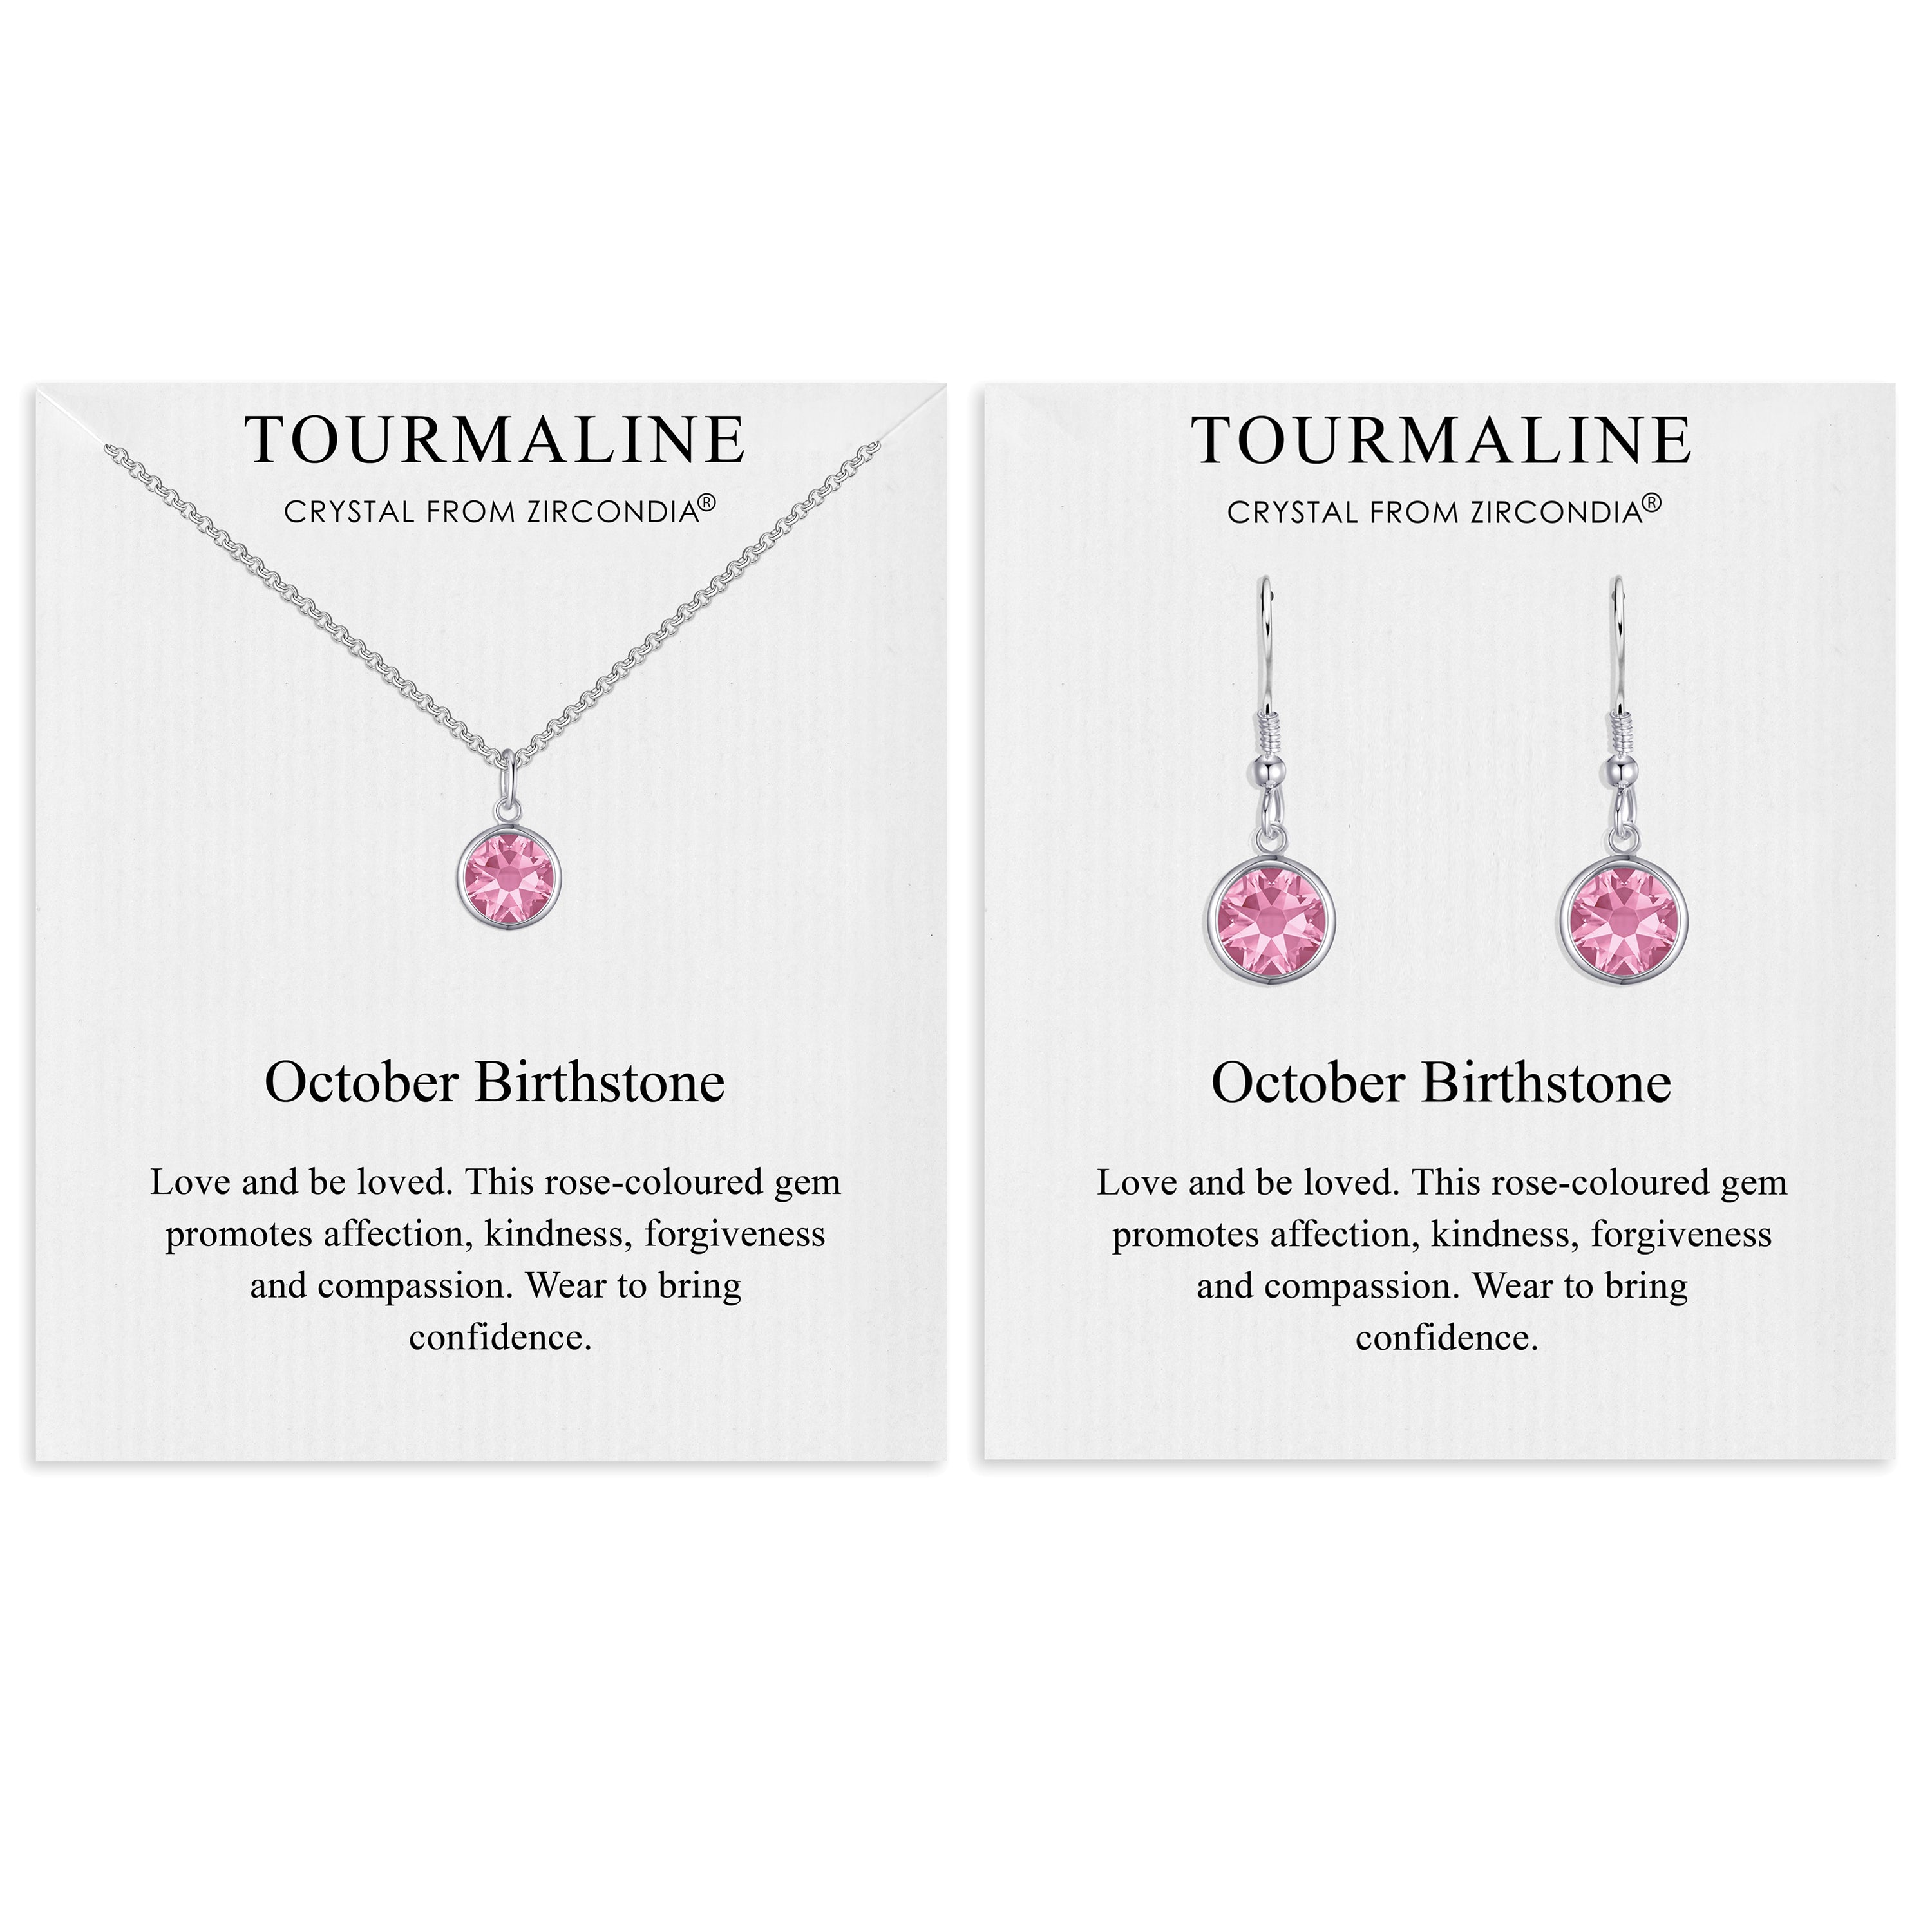 October (Tourmaline) Birthstone Necklace & Drop Earrings Set Created with Zircondia® Crystals by Philip Jones Jewellery